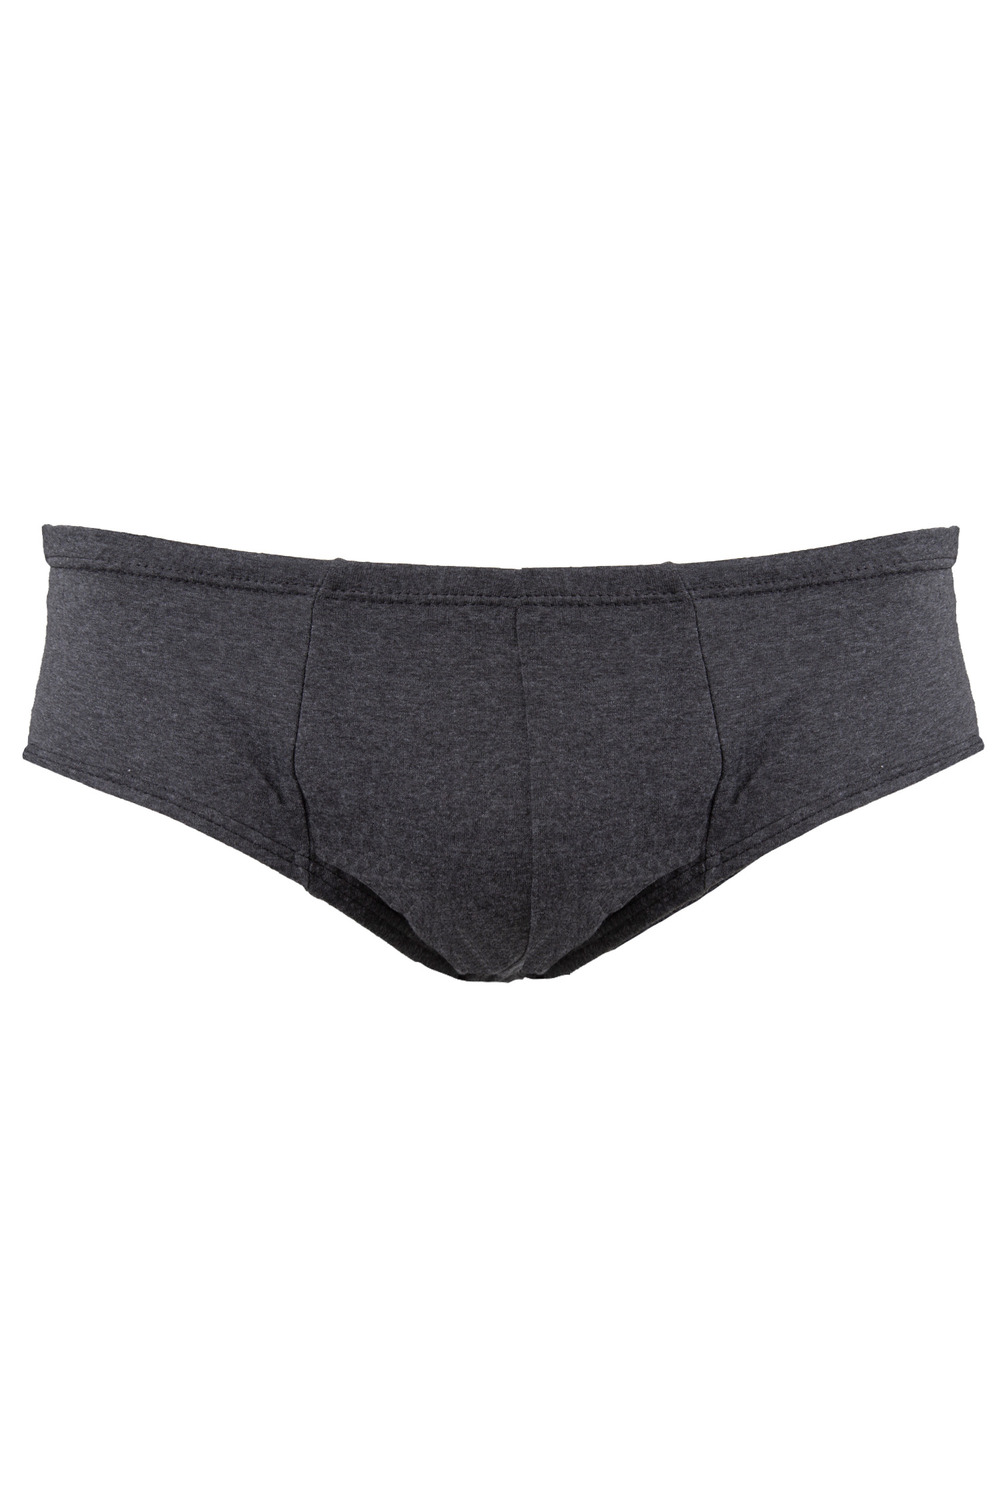 Yves Martin Underwear - Men's Tanga Briefs